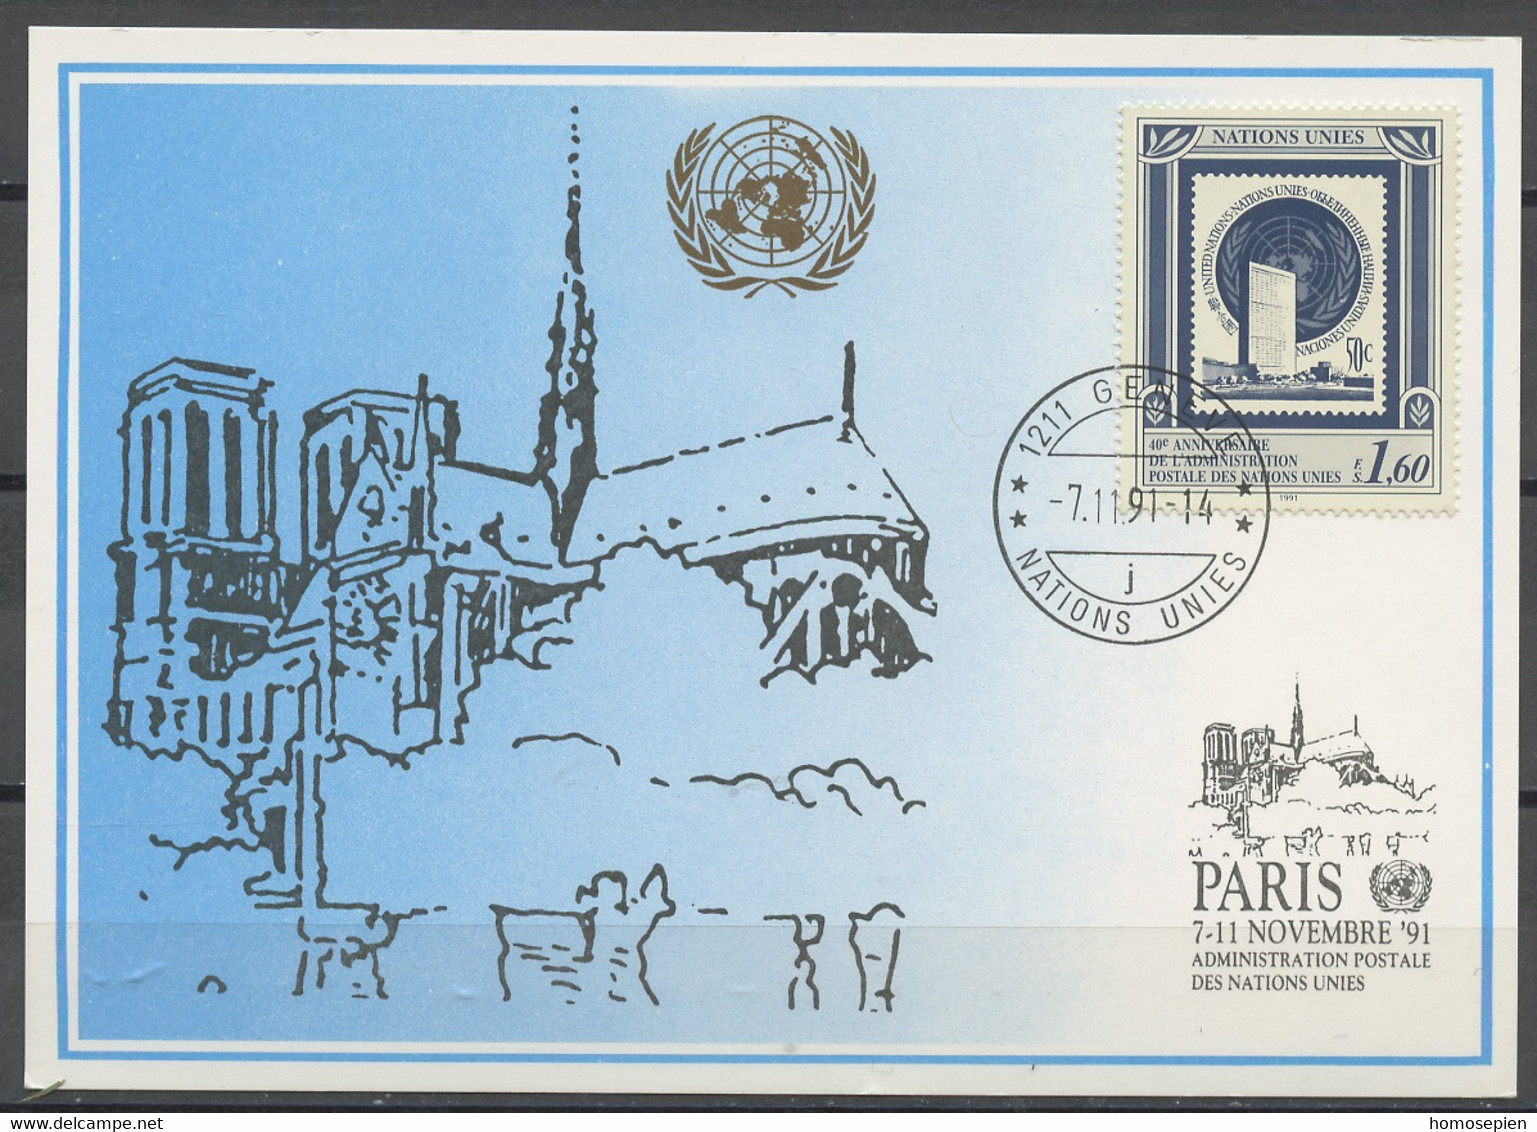 NU Genève - Vereinte Nationen CM 1991 Y&T N°215 - Michel N°215 - 1,60f Siège De L'ONU - Maximumkarten